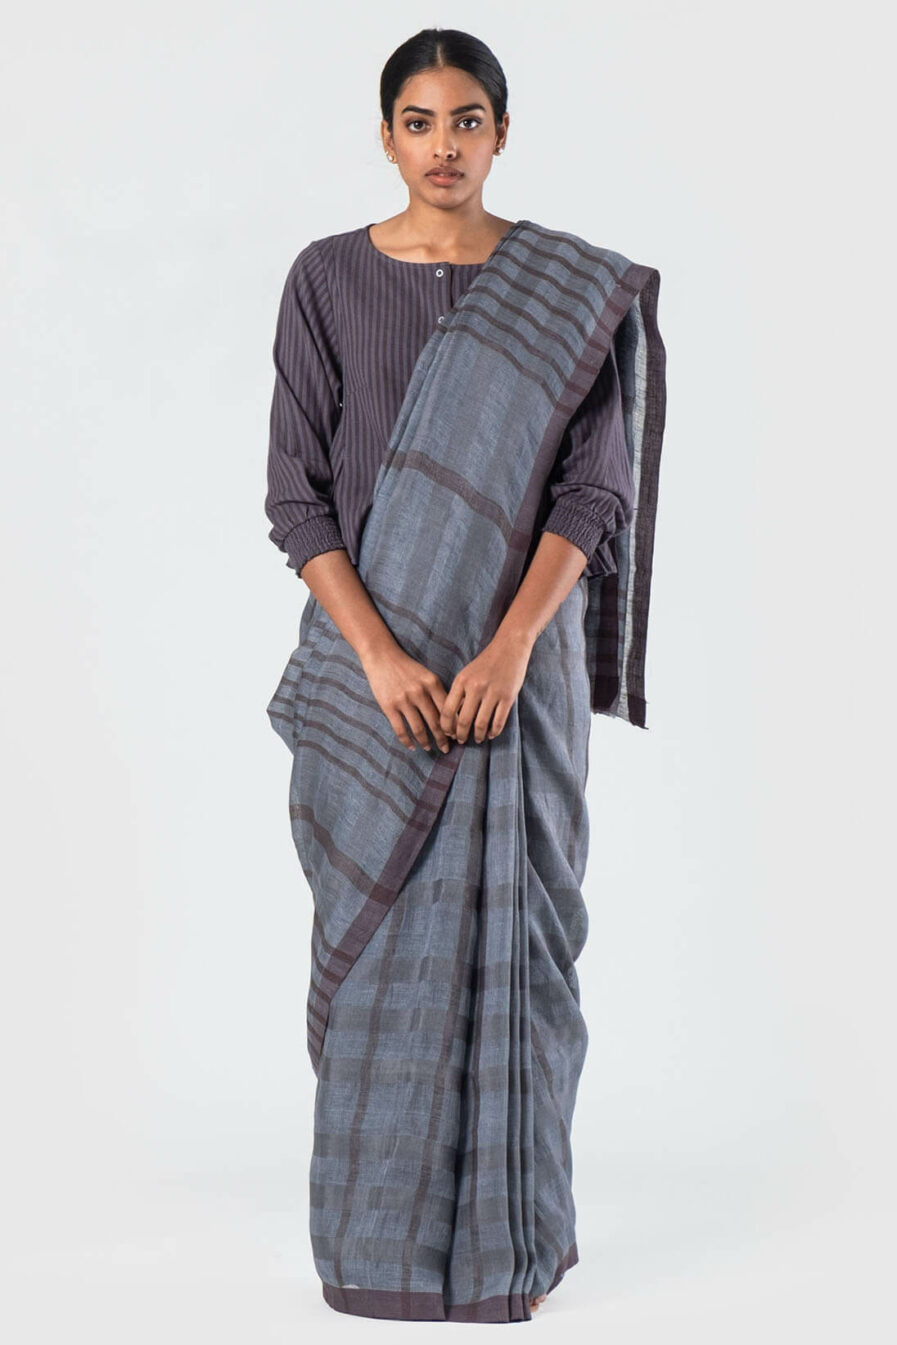 Anavila Pewter and wine Linen silk grid sari